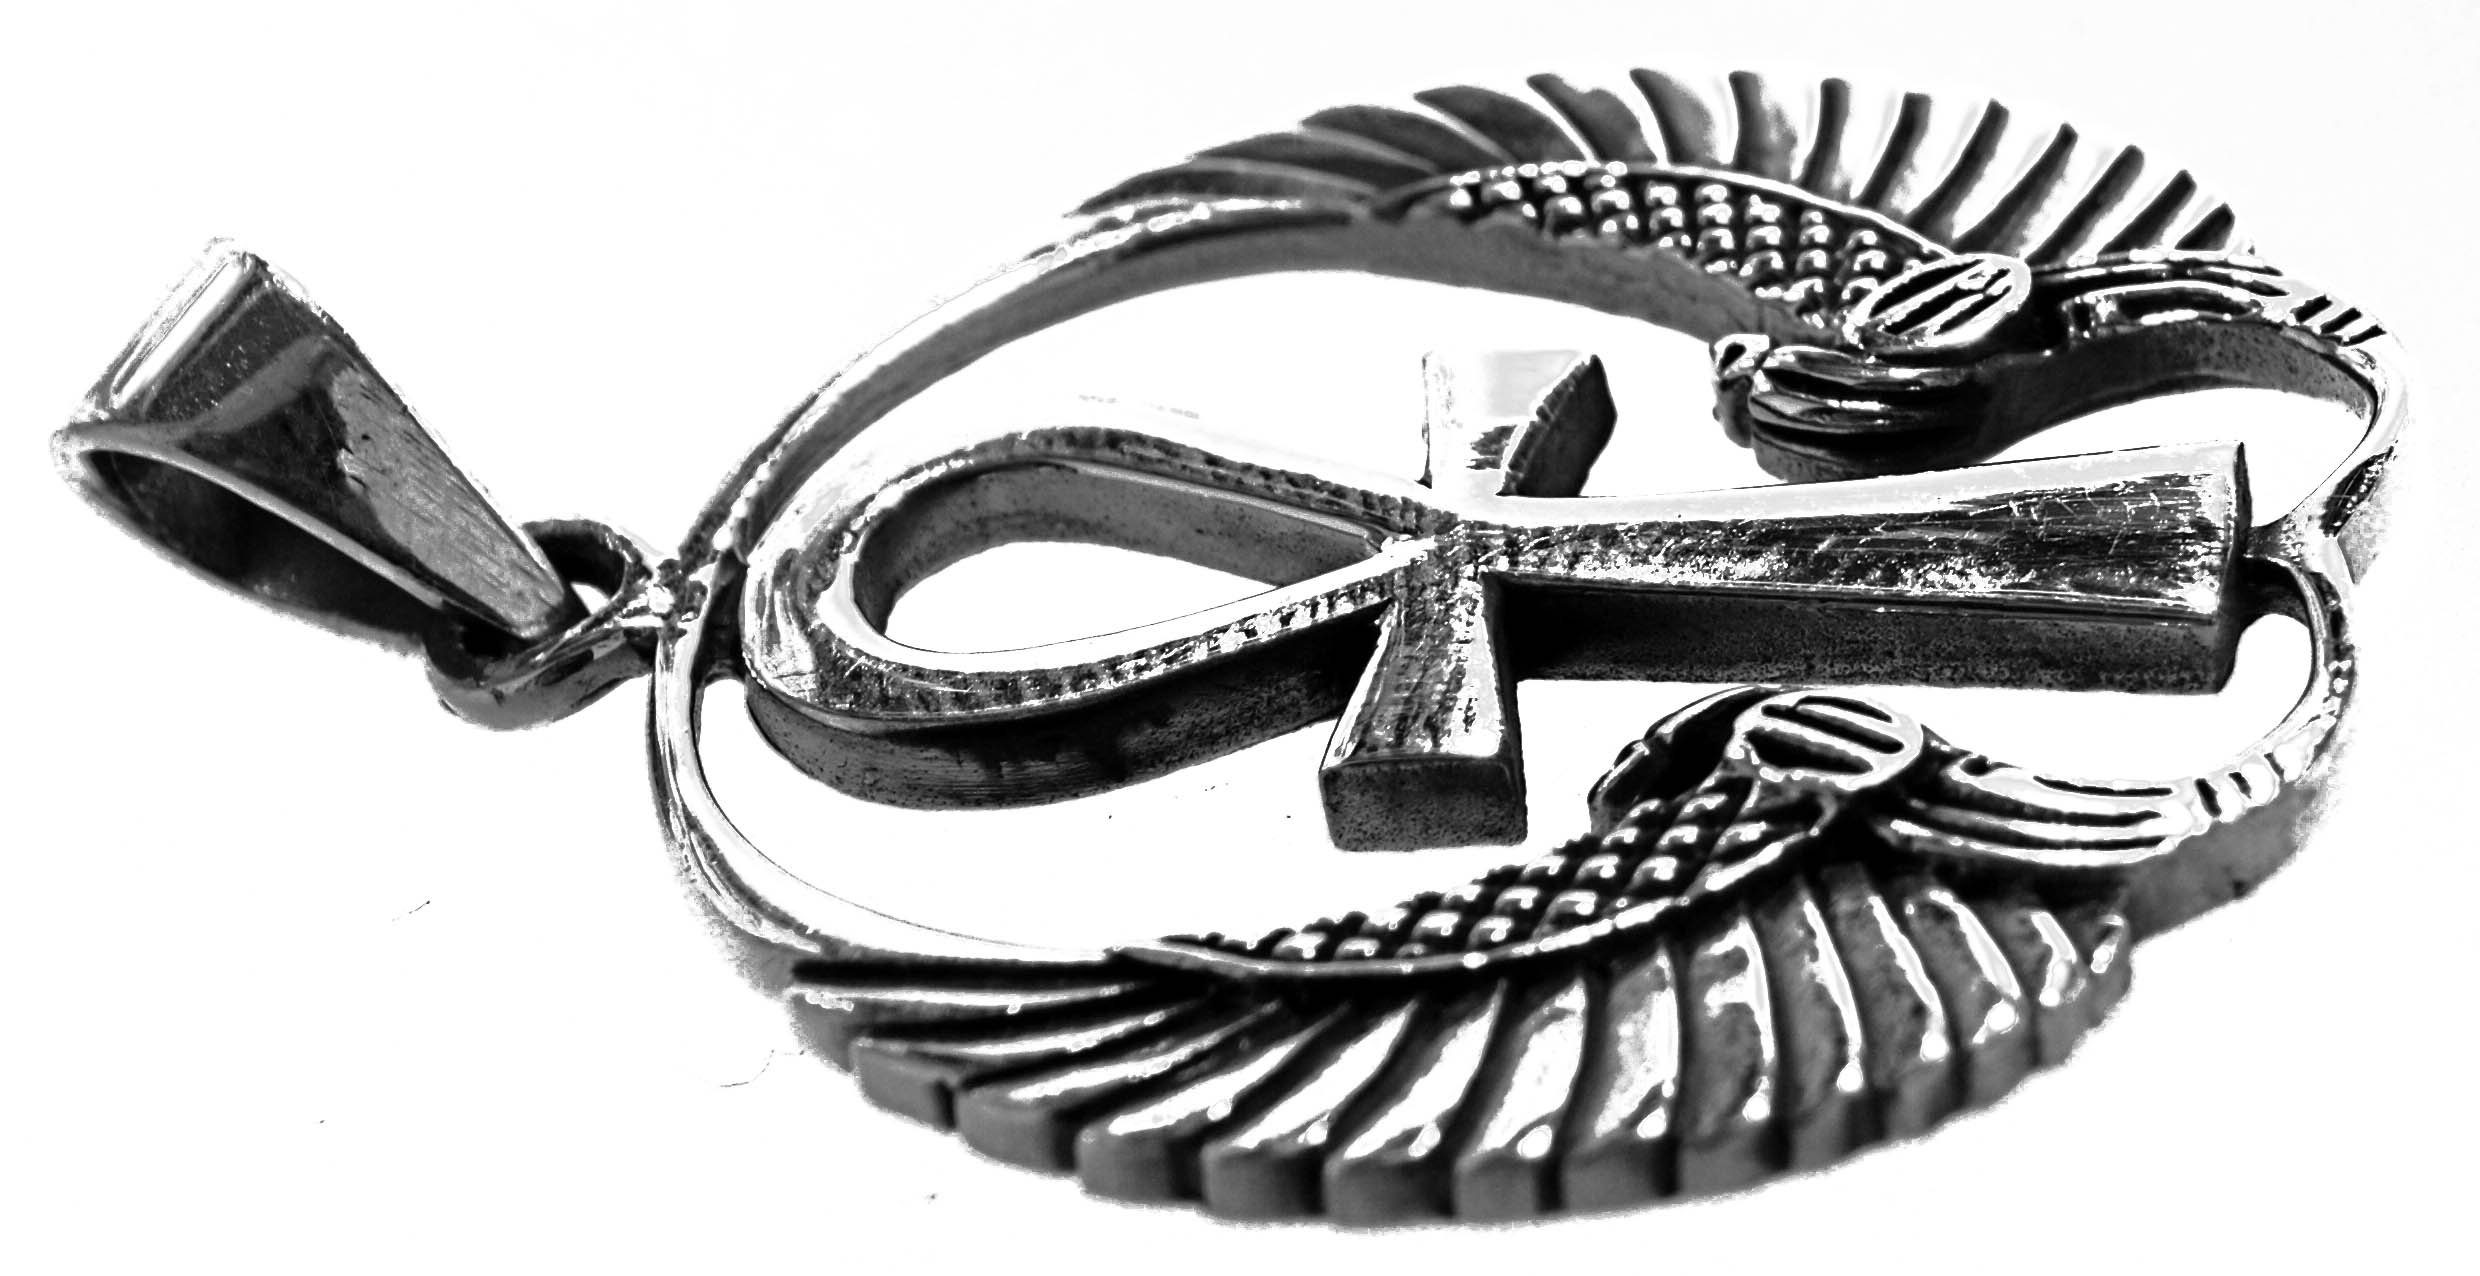 Leather Anch Henkelkreurz 925 Lebenskraft Kiss Ägypten Sterling Silber Kettenanhänger of Anhänger Ankh Nr. 409